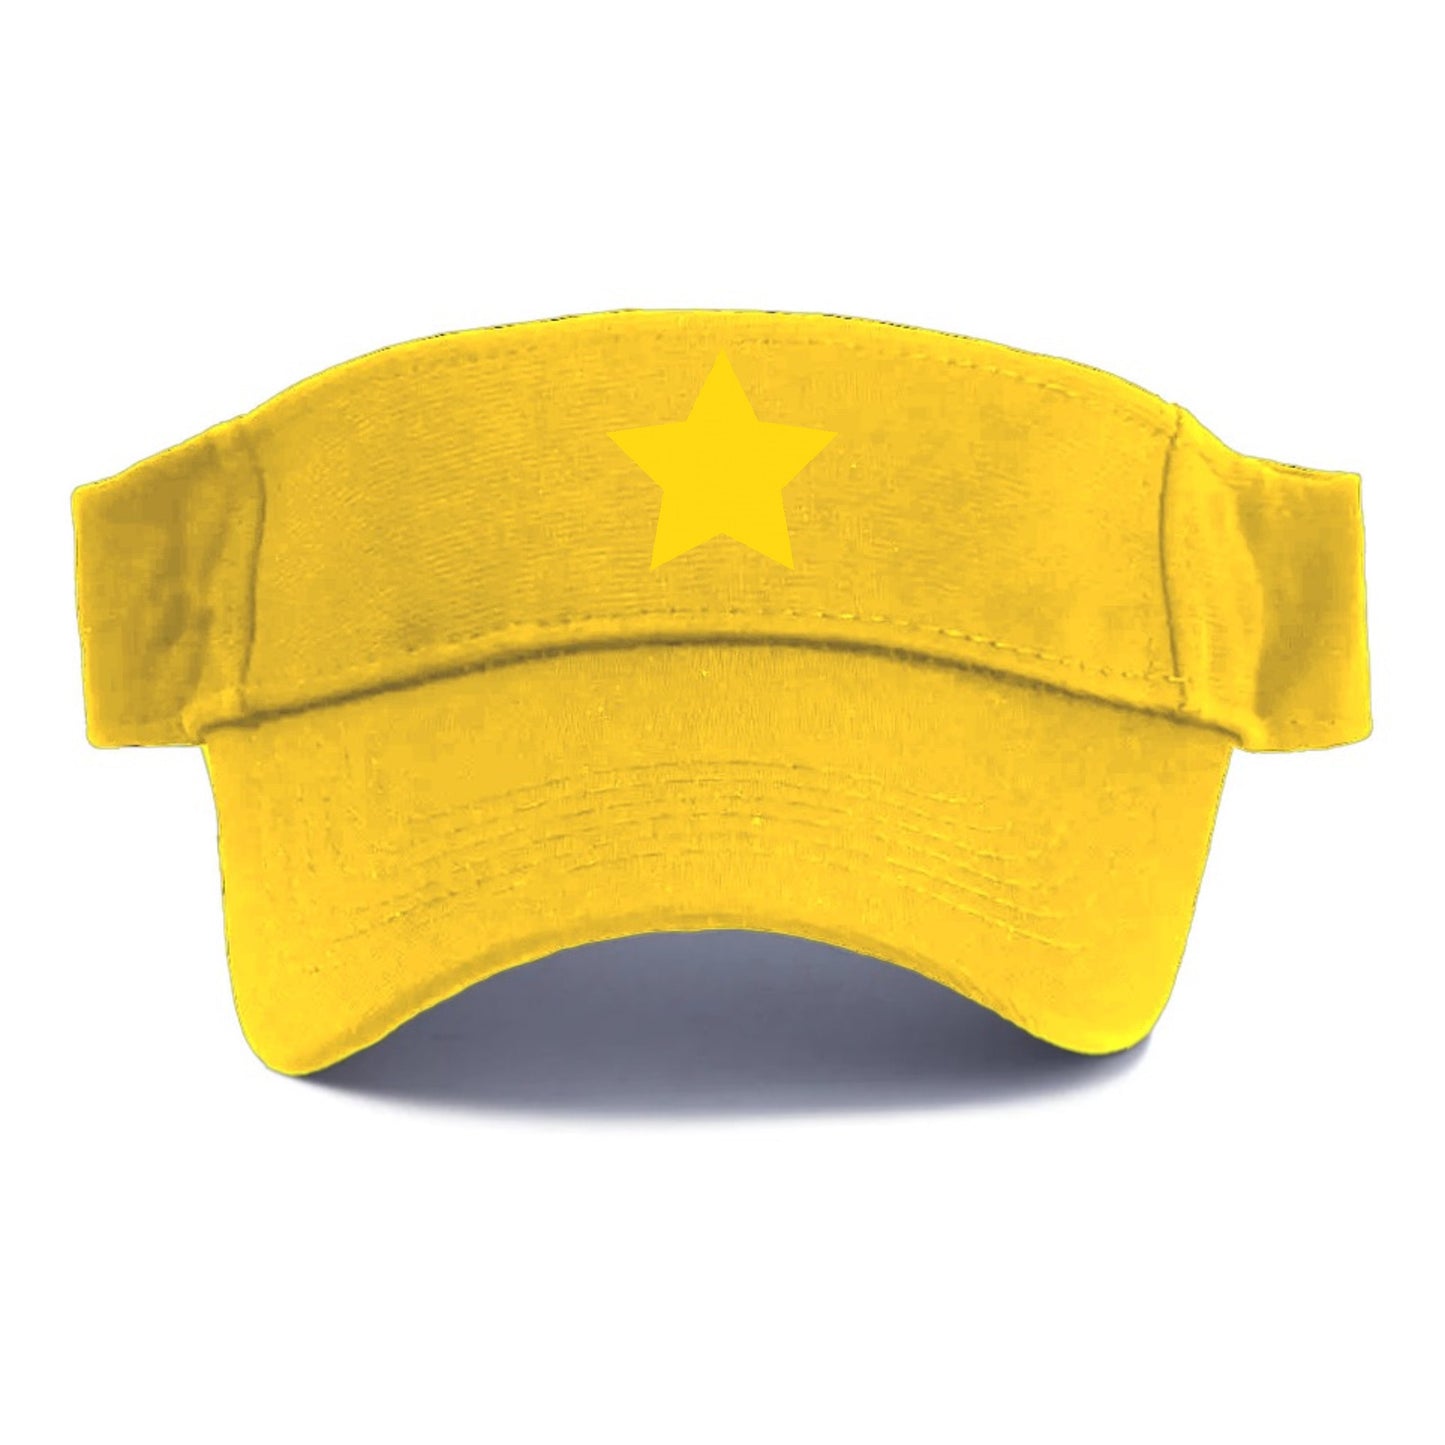 Retro 80s Star Yellow Hat